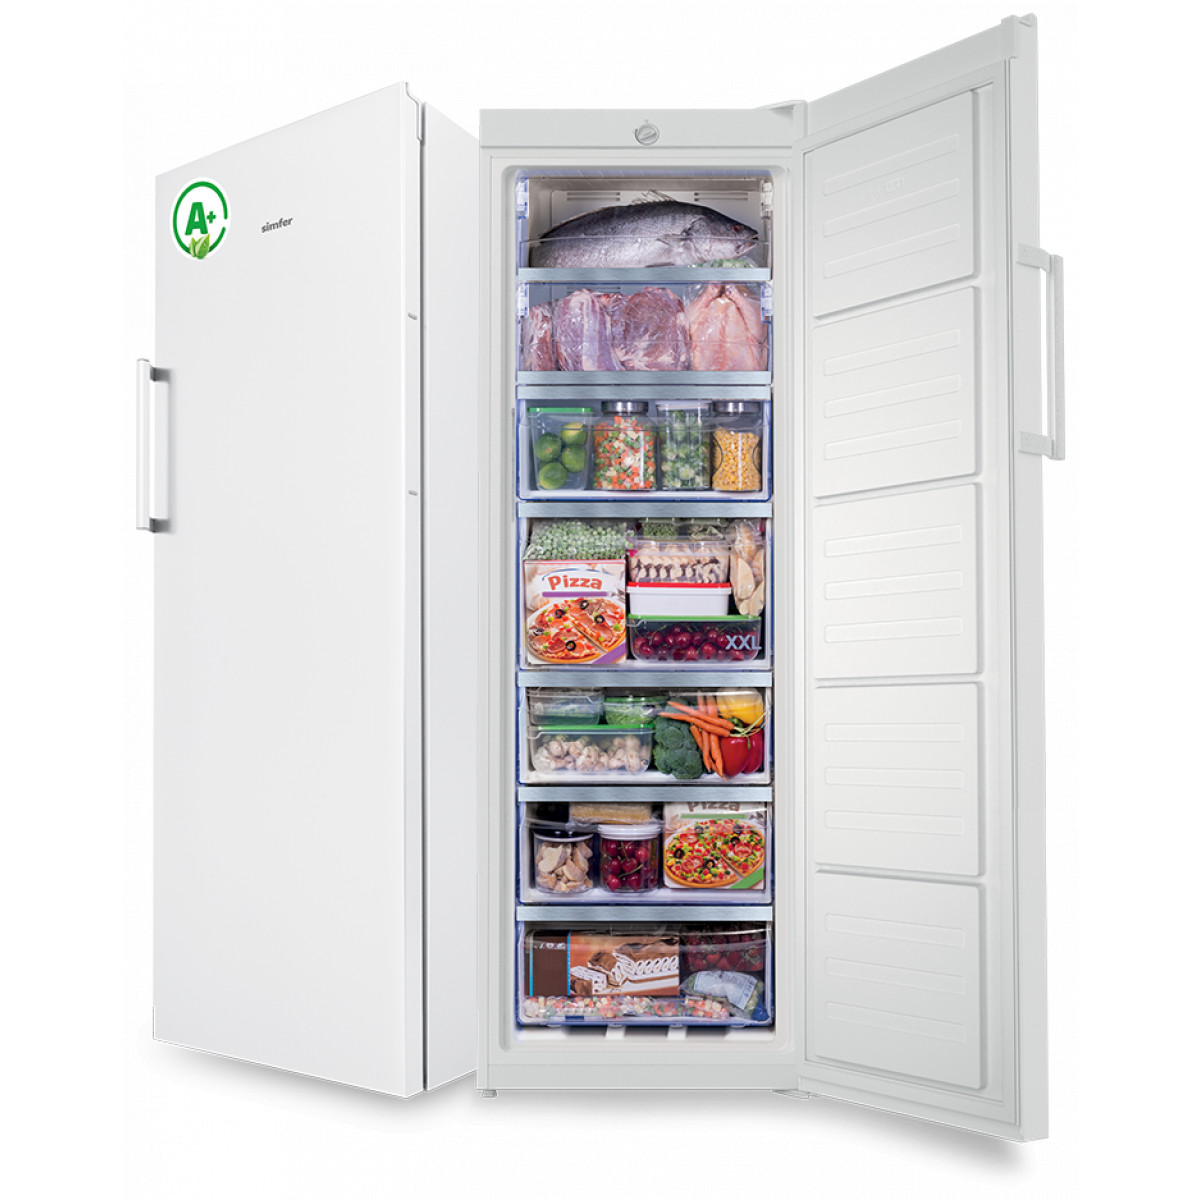 Simfer Freezer 285 Liters +A - White